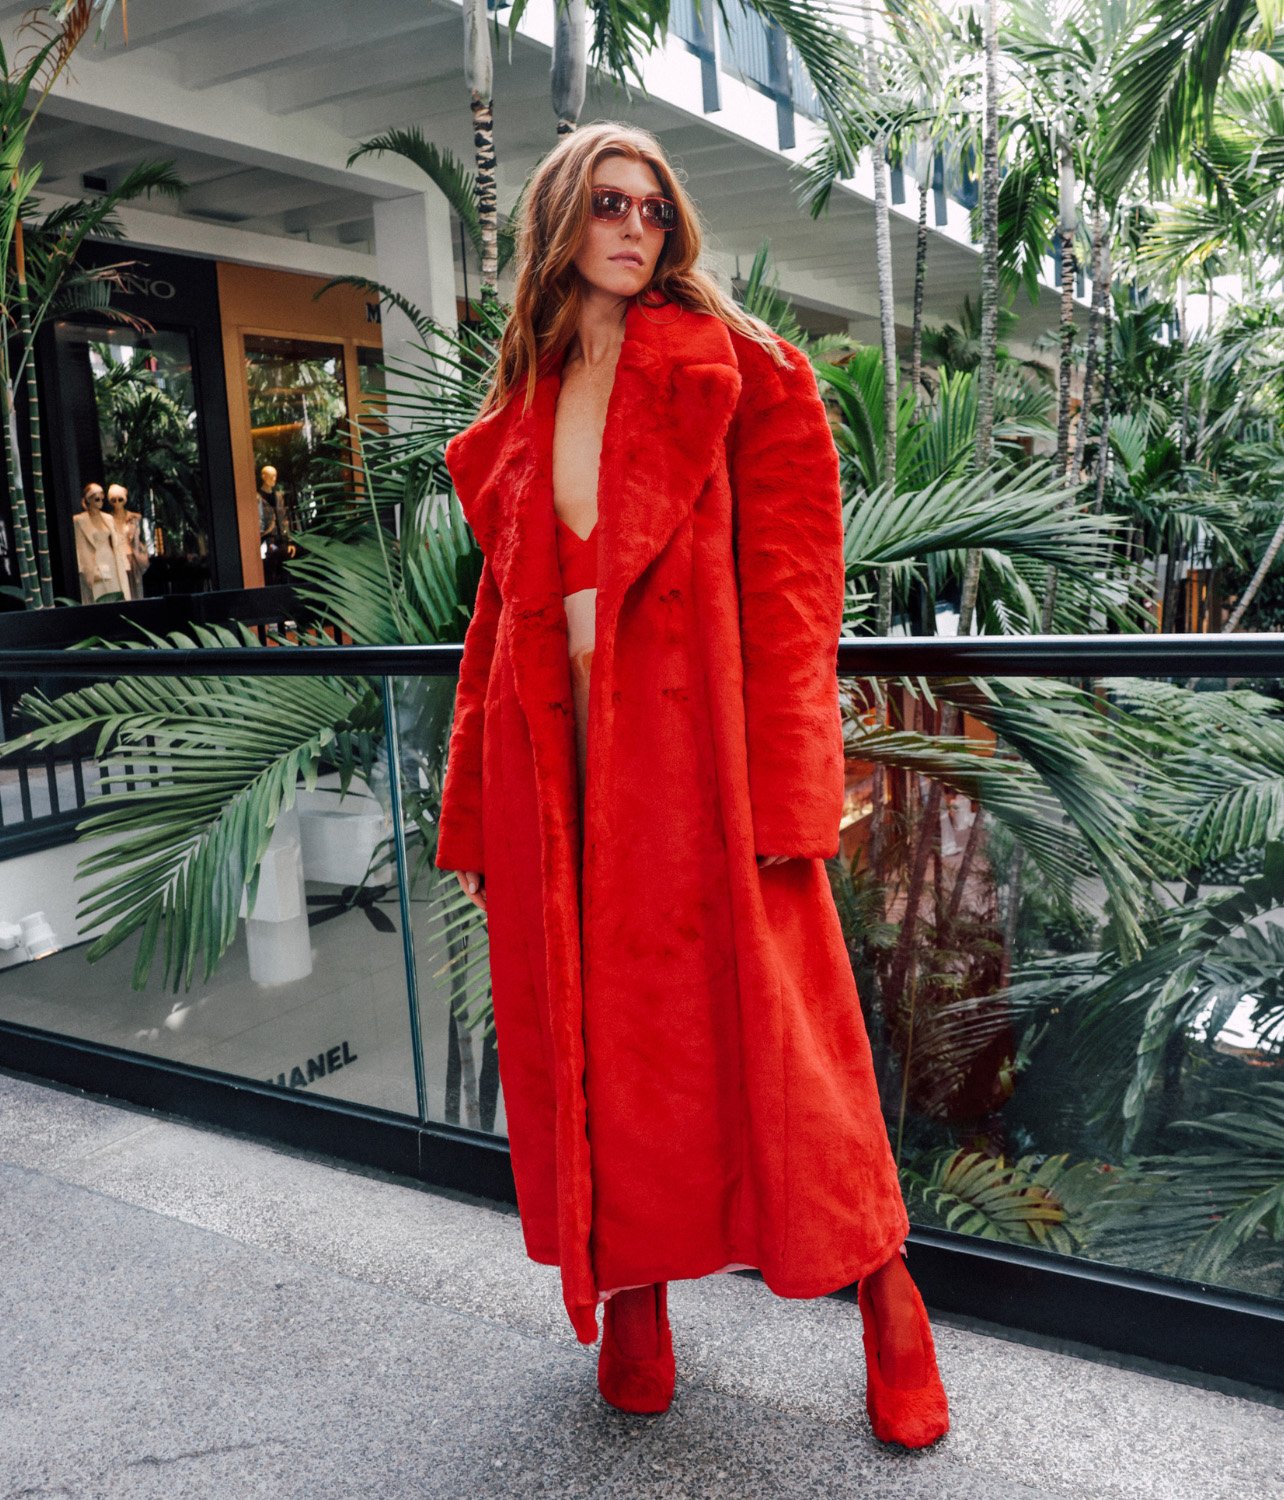 Model Kate Krueger wearing a full Stella McCartney look including red fur coat, pumps, and glasses